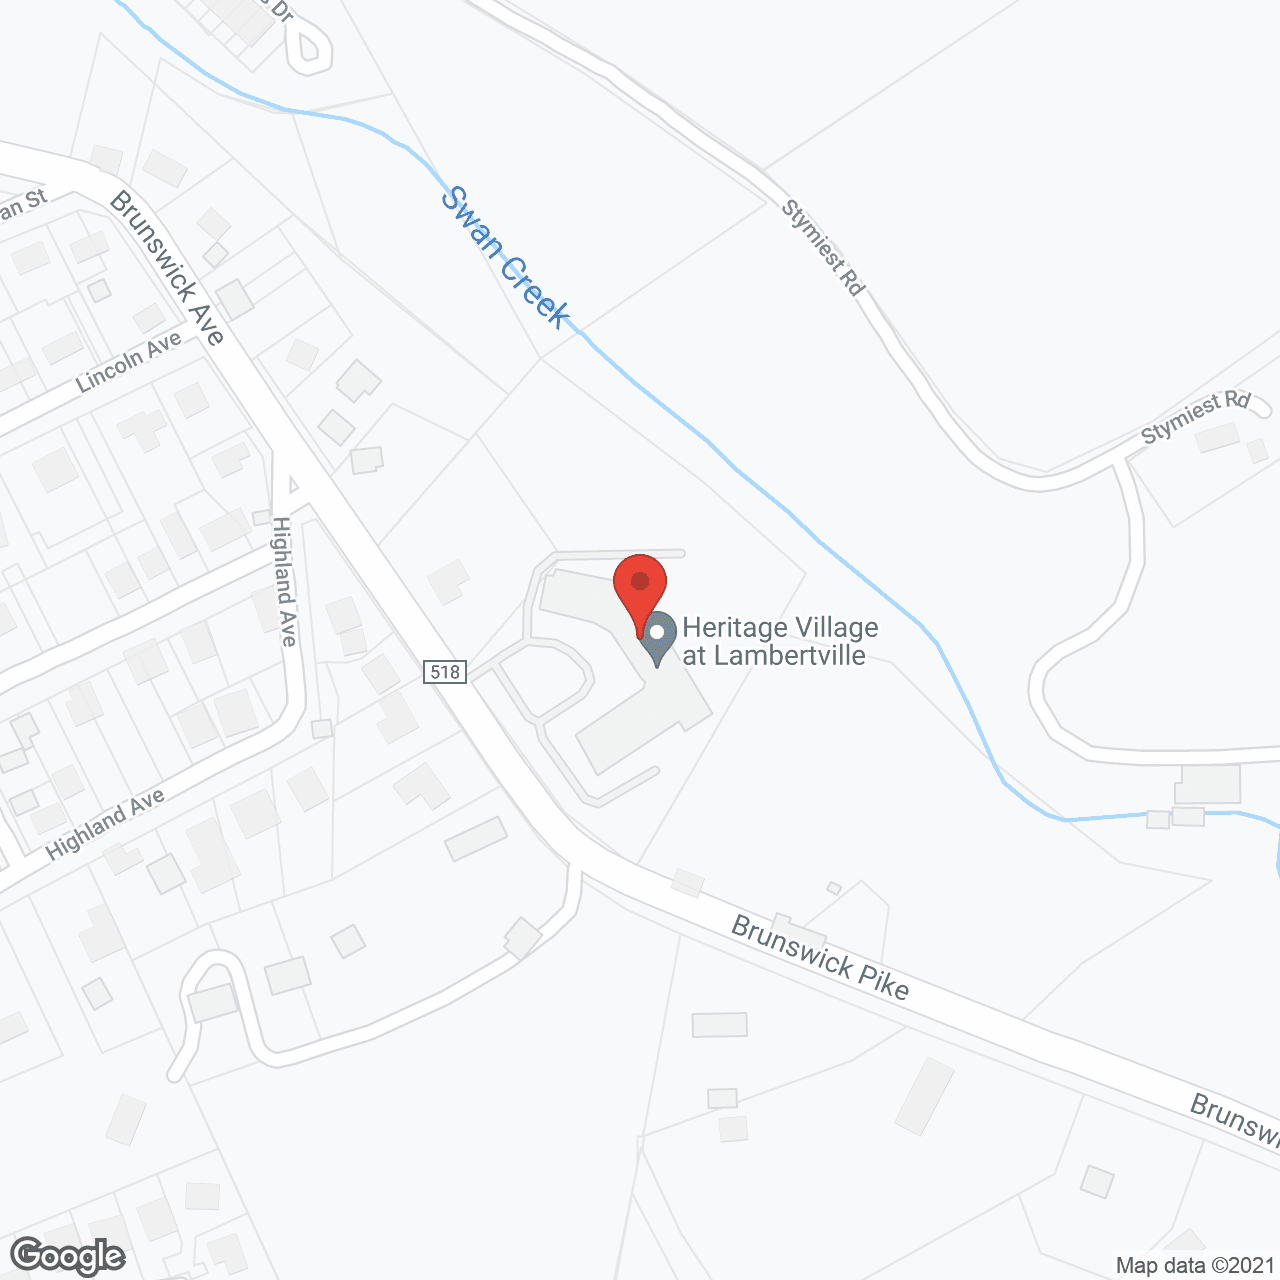 Heritage Village at Lambertville in google map